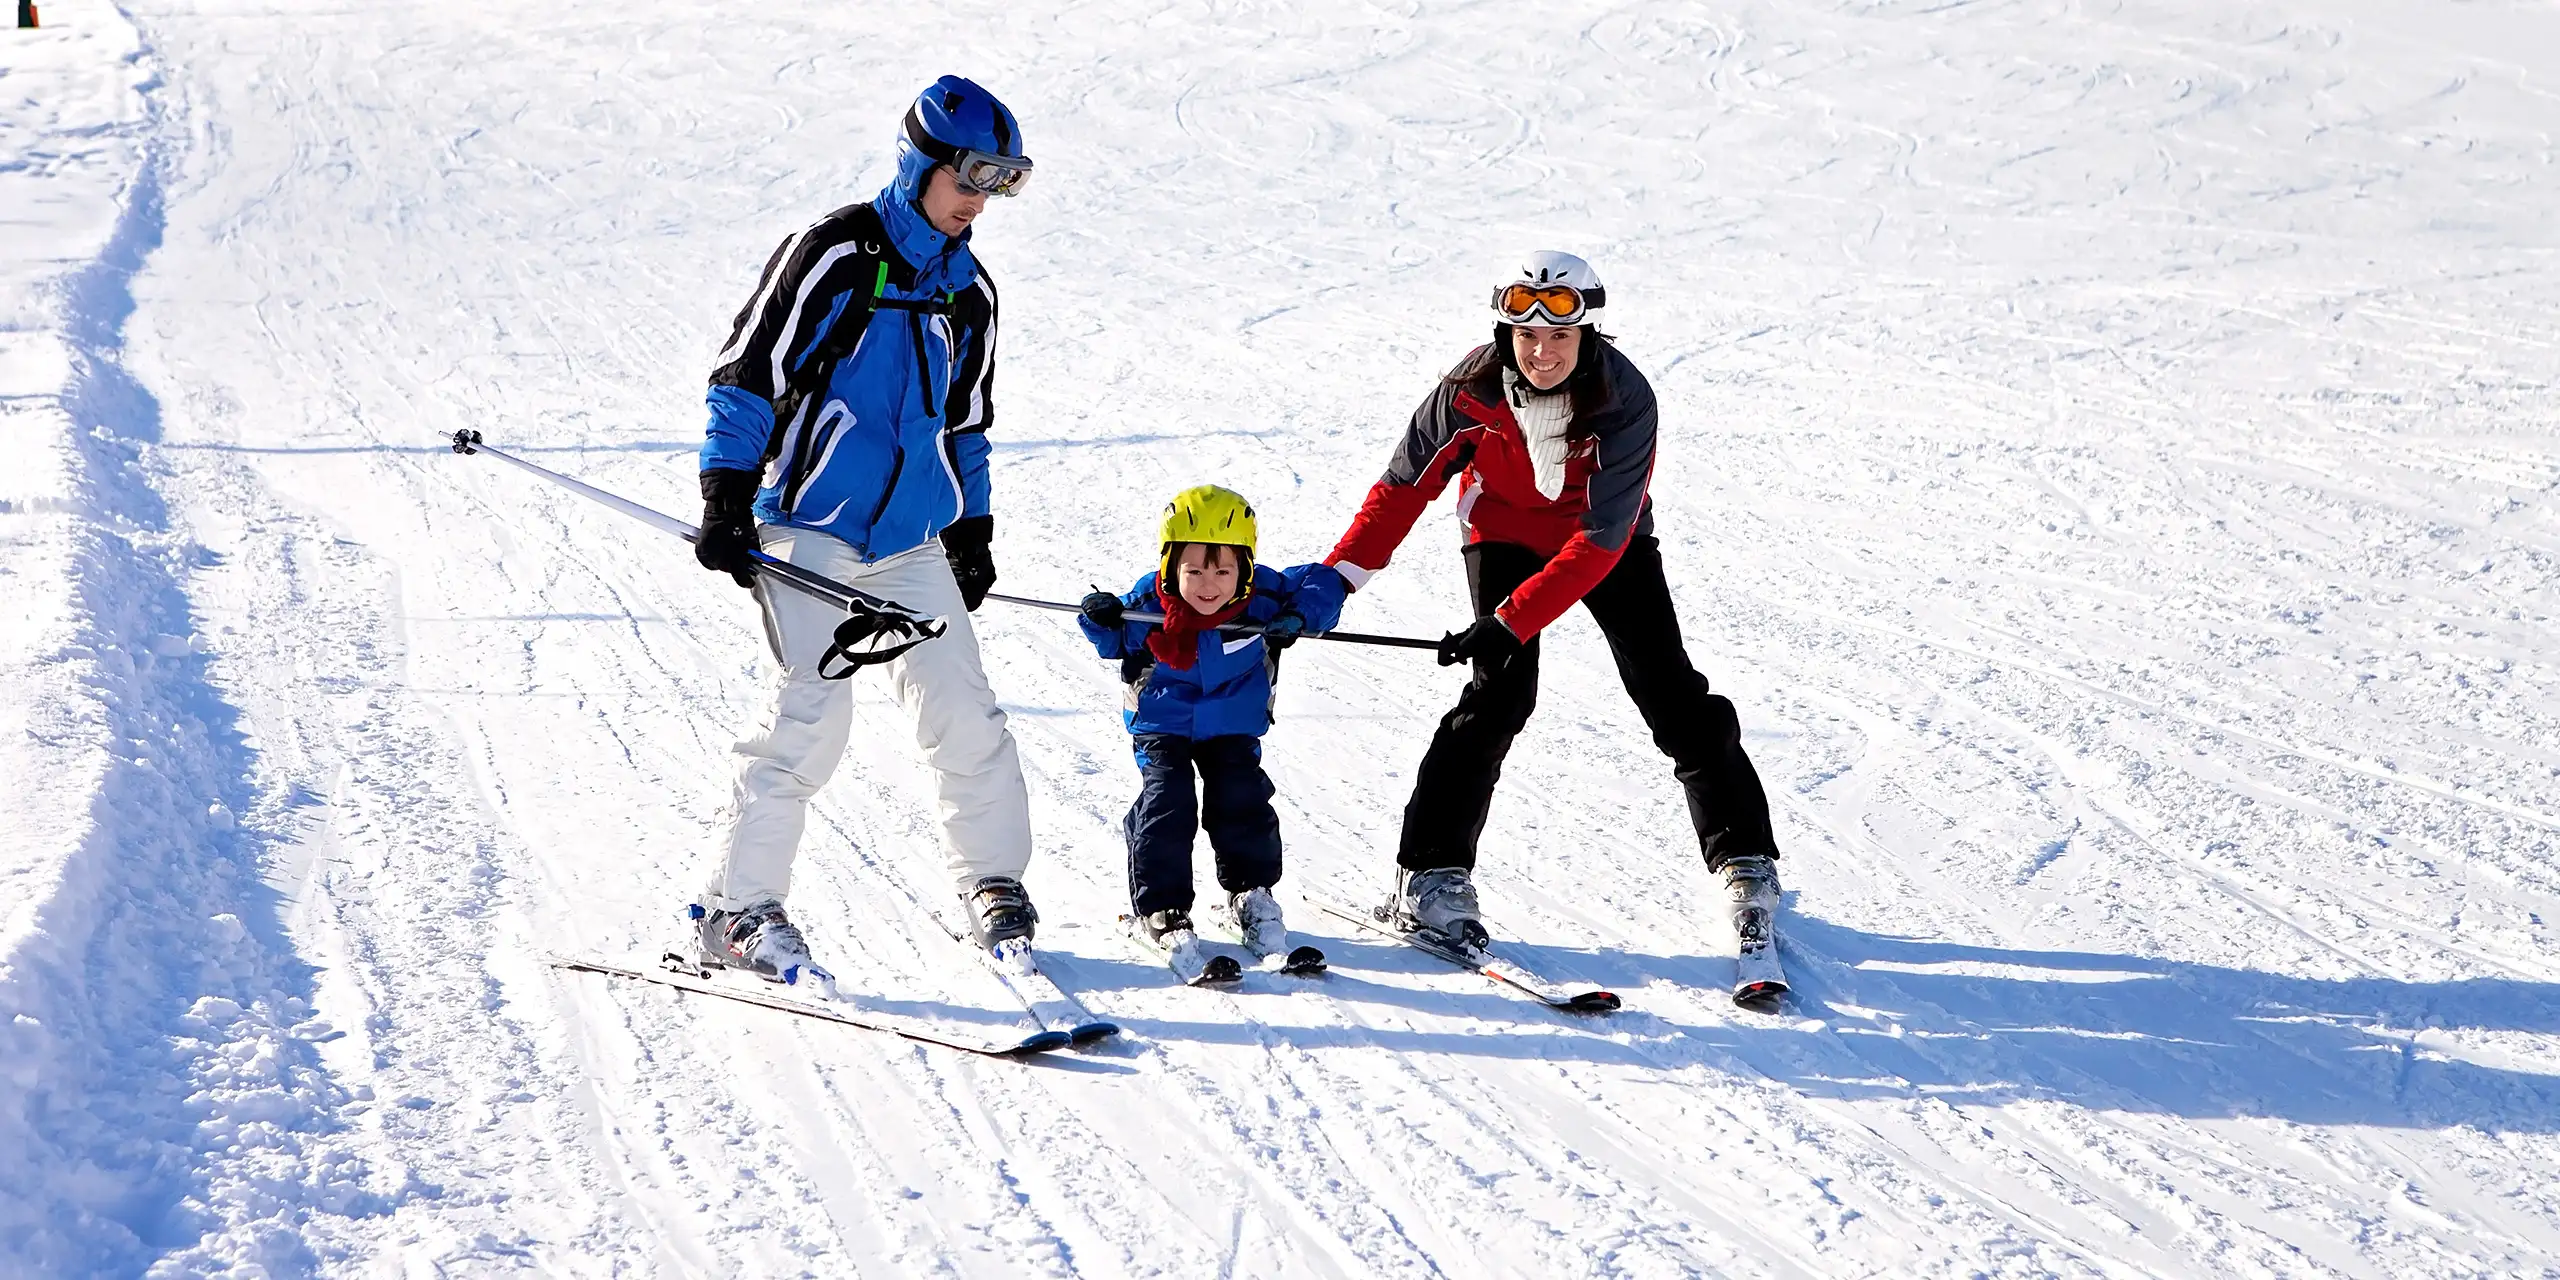 Family learning ski; Courtesy of Tomsickova Tatyana /Shutterstock